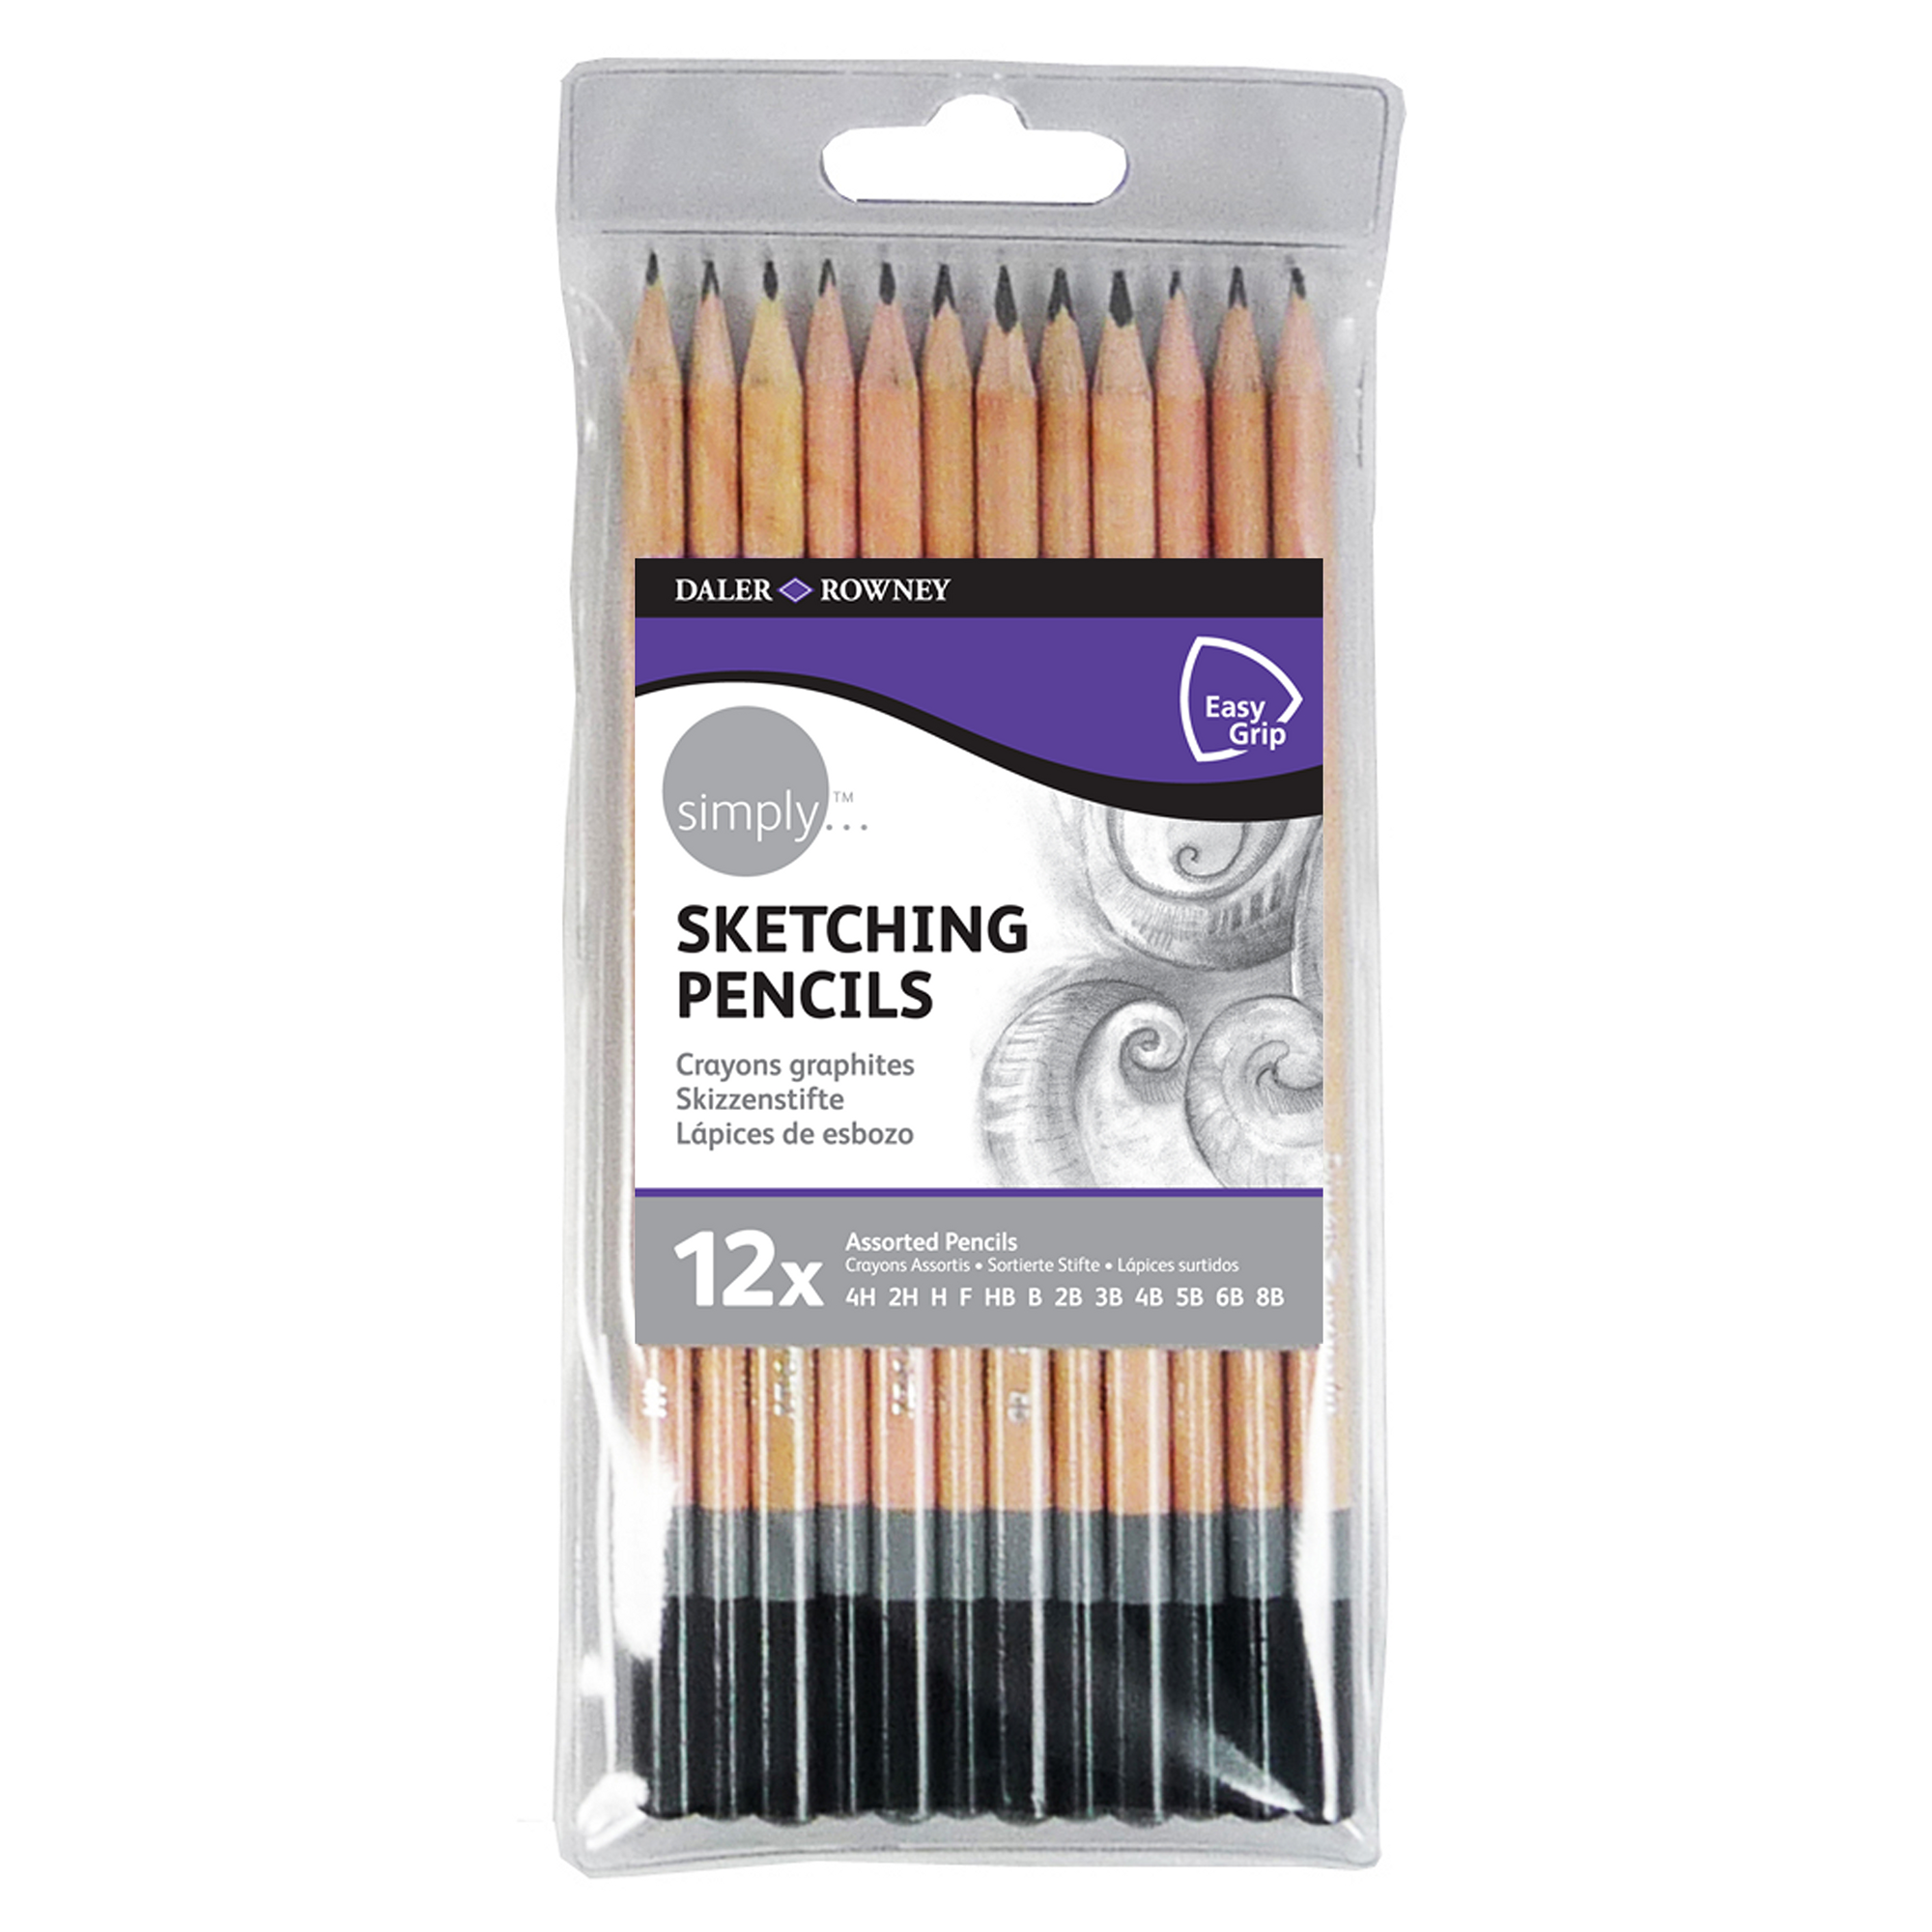 12 x Staedtler Tradition Pencils Sketching - 6B 5B 4B 3B 2B B HB F H 2H 3H  4H